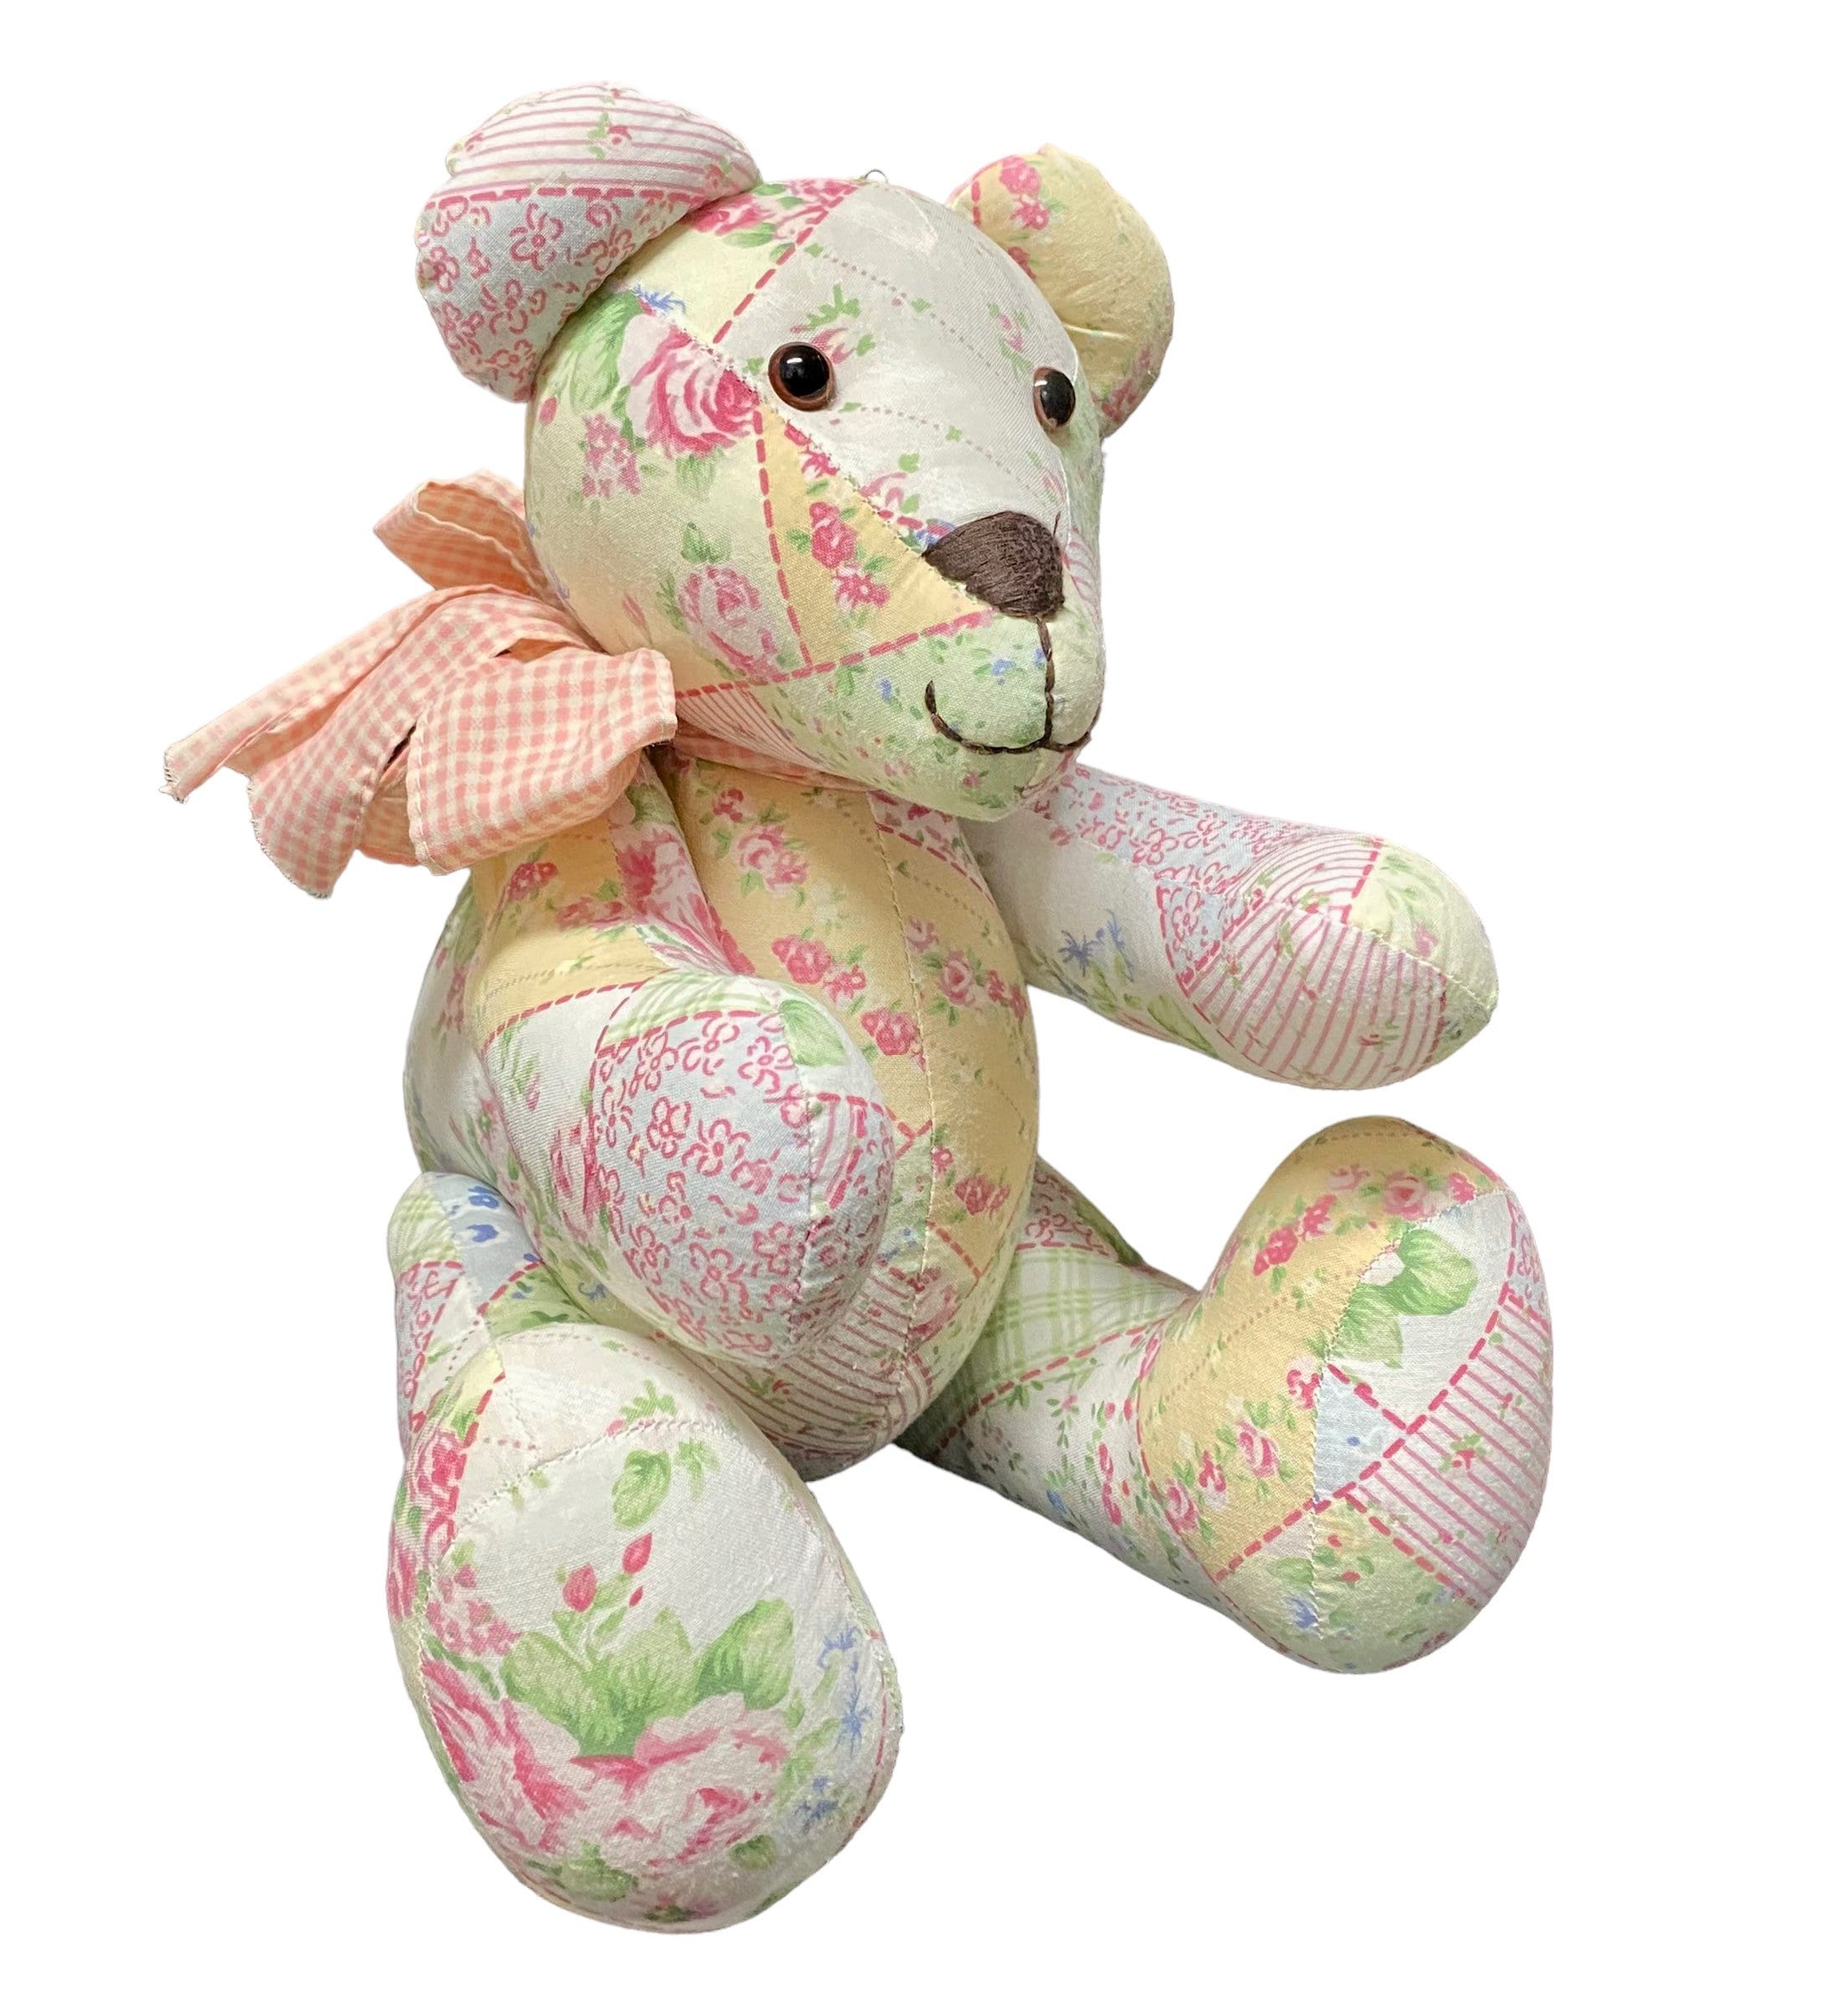 Vintage Teddy Bear Jointed Peluche Animal en peluche, cadeau